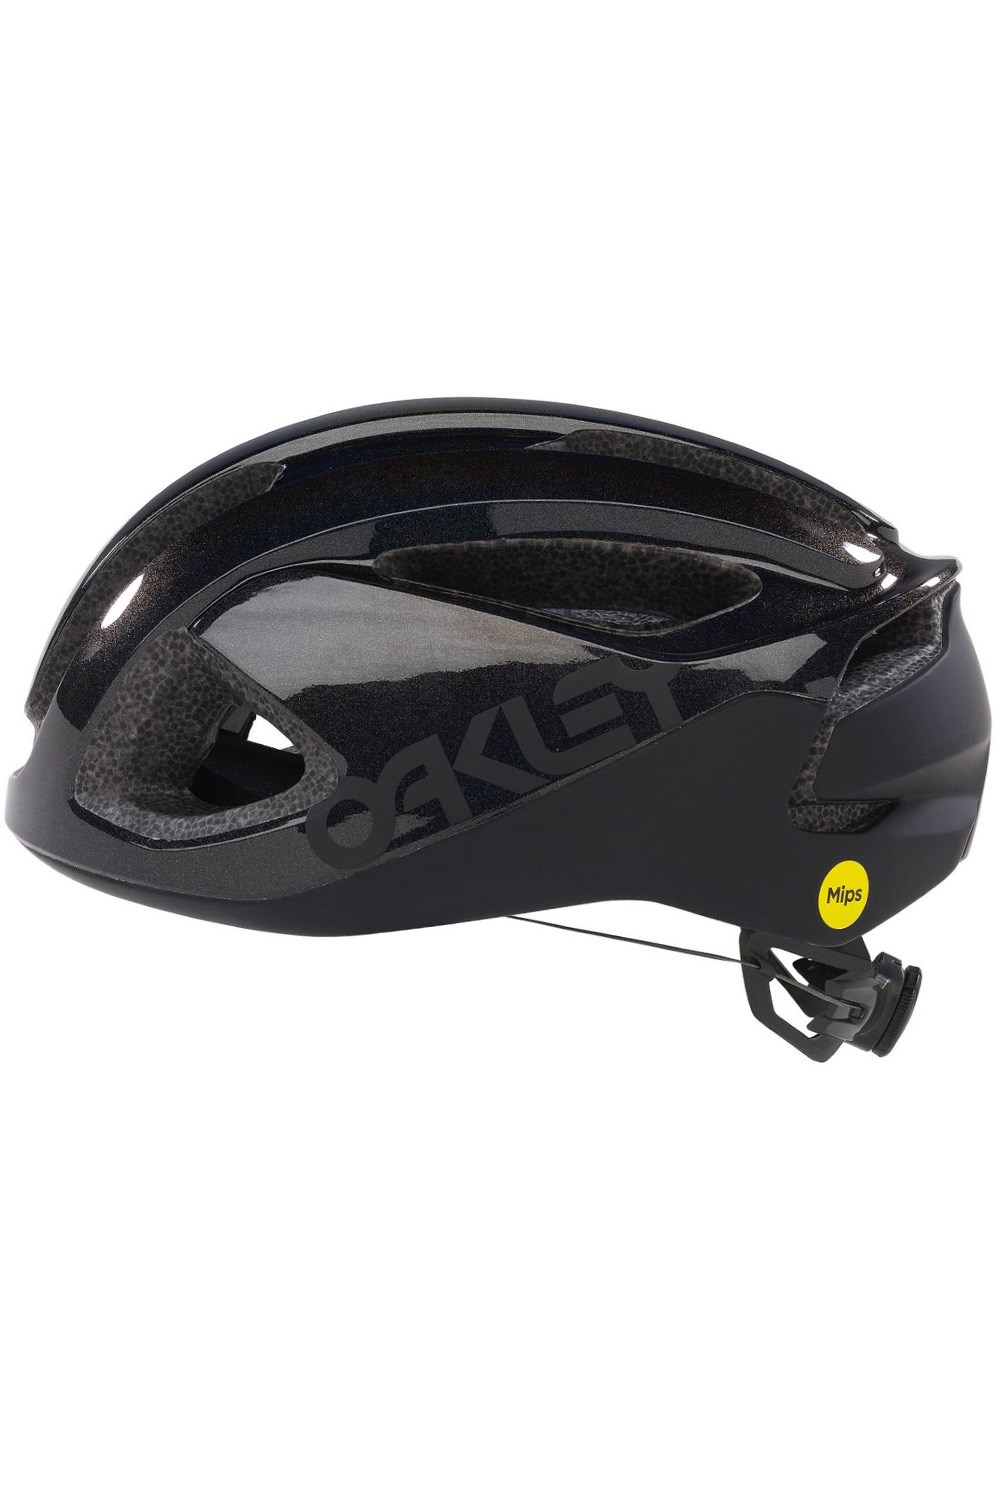 Aro3 Unisex Road Cycling Helmet -